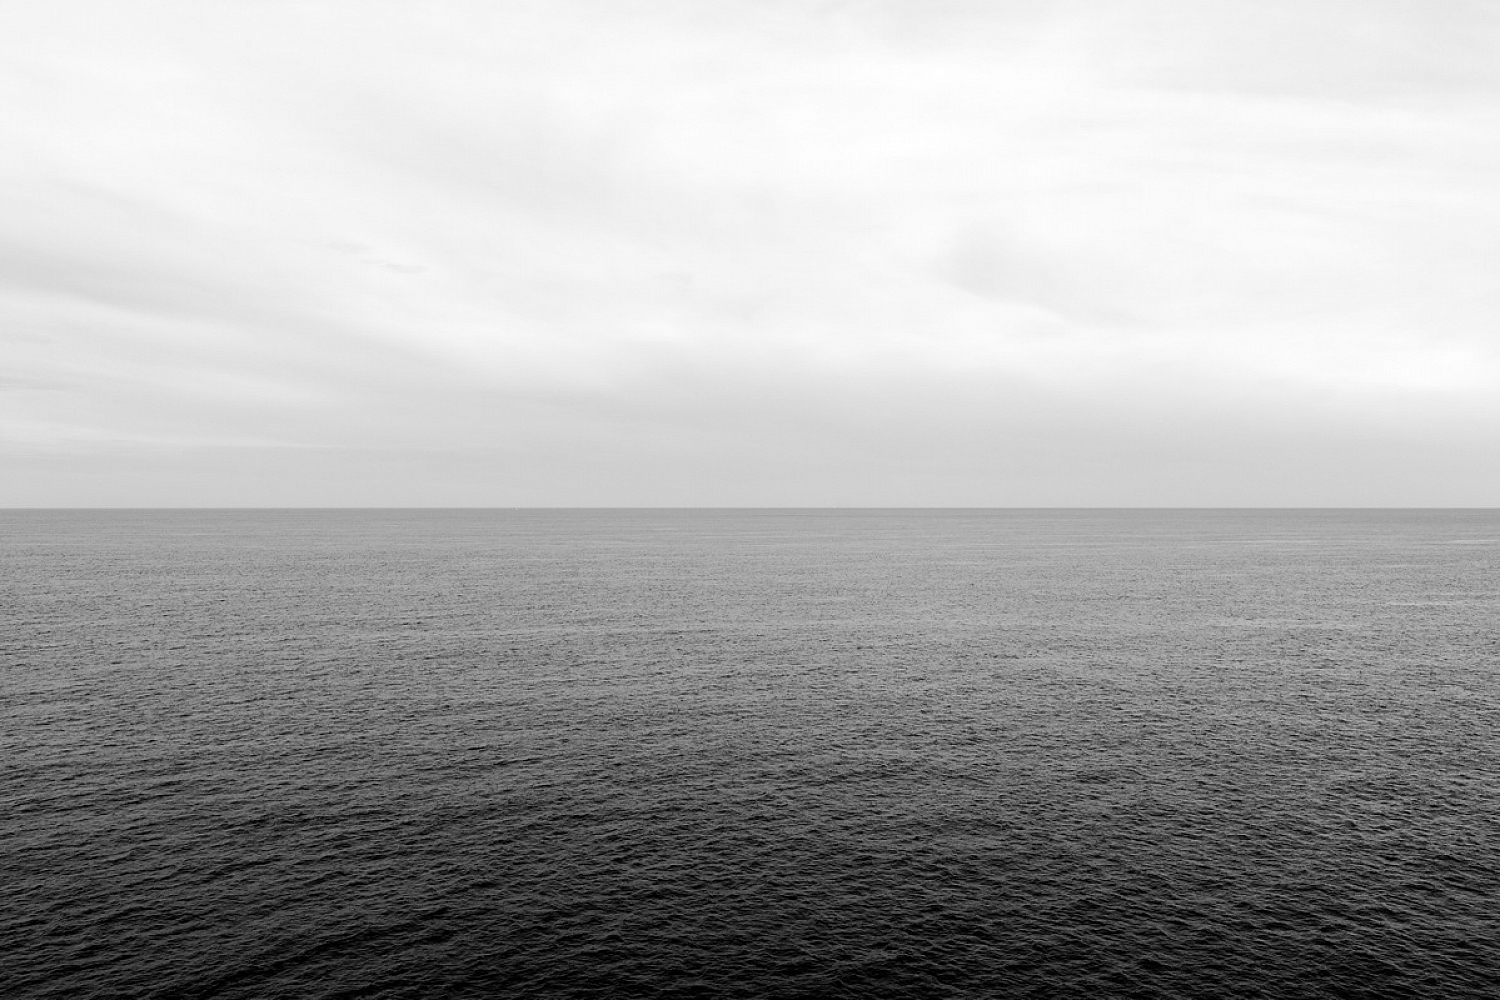 Dolph kessler - Fotoboek: The Wave, Crossing the Atlantic 